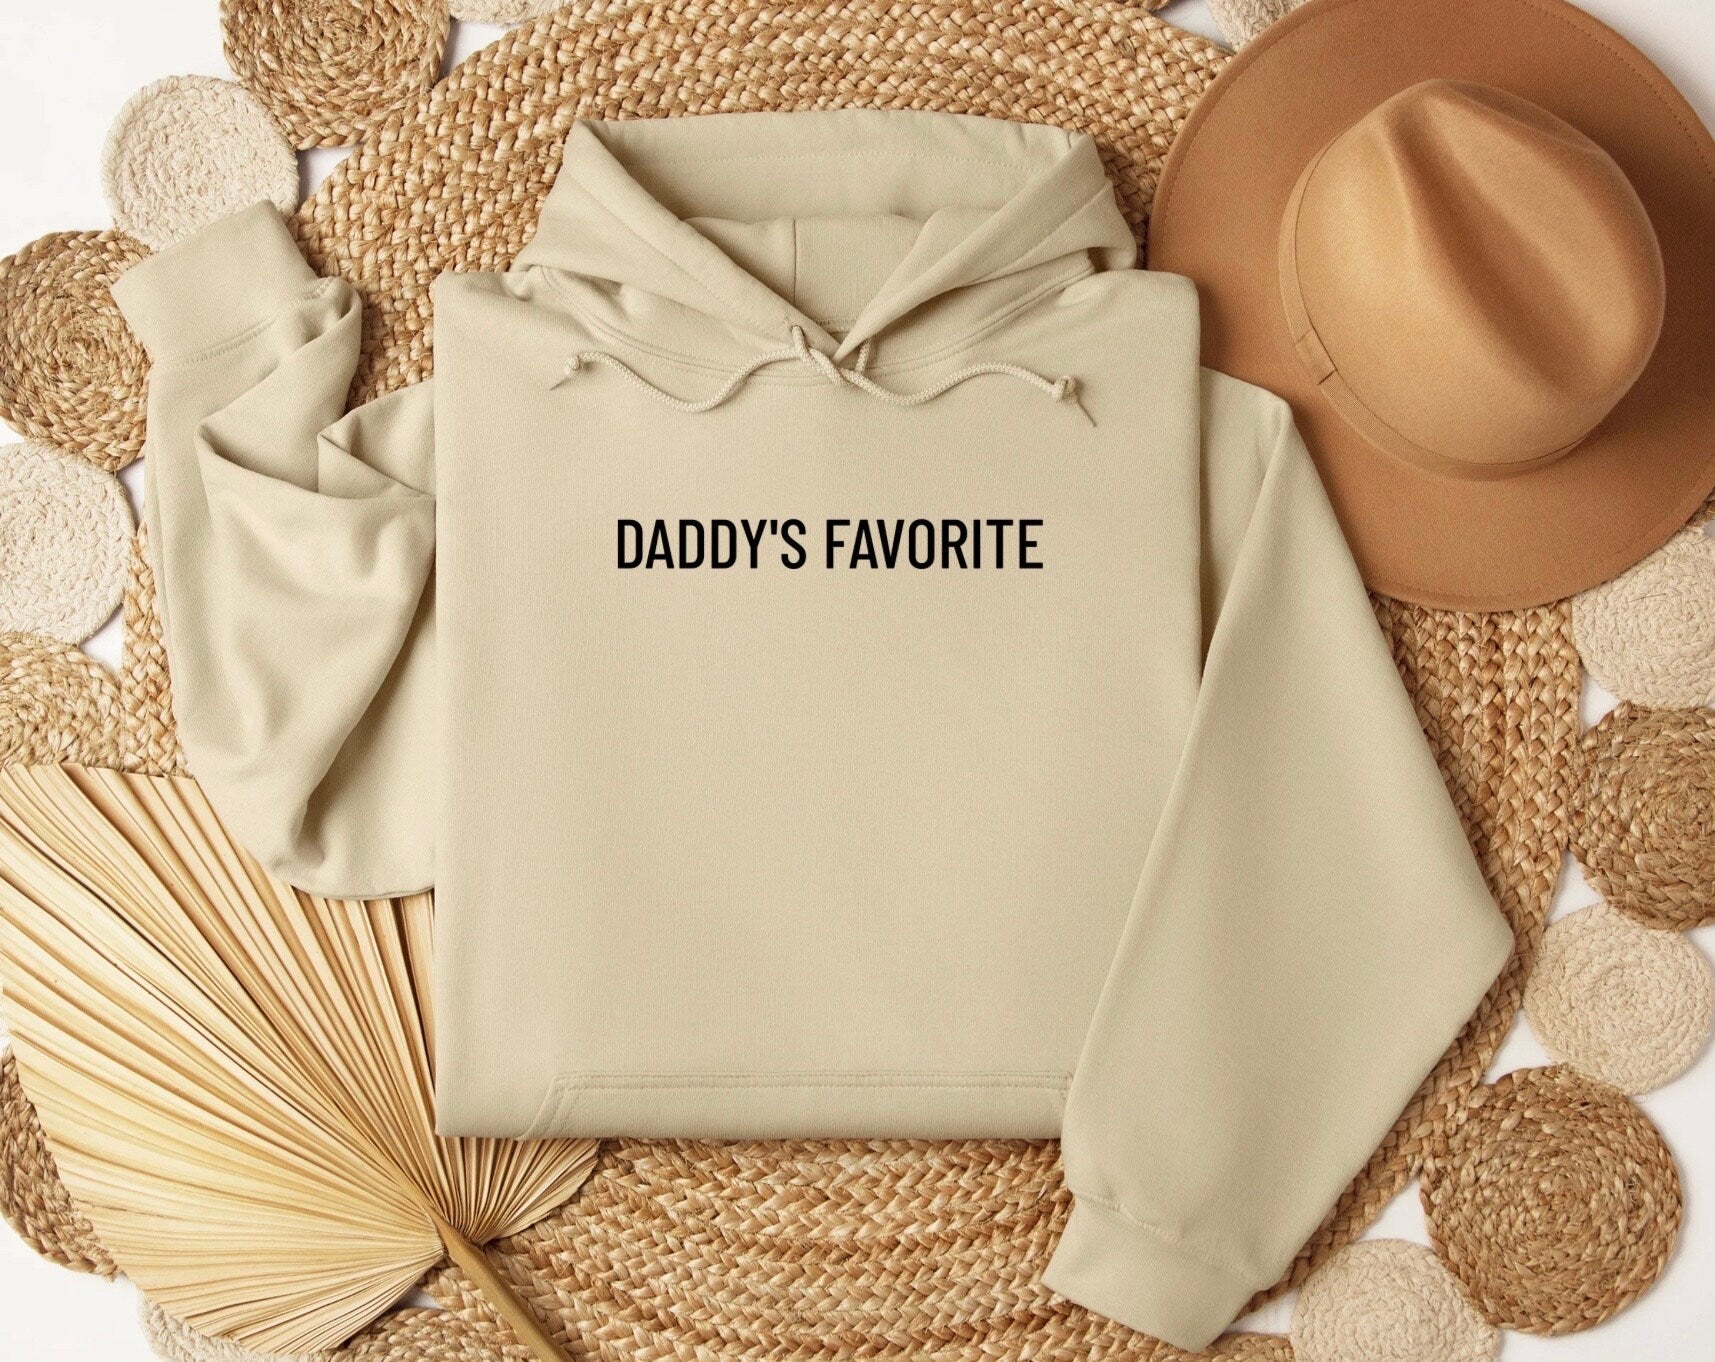 Daddys Favorite Sweatshirt, Daddys Favorite Shirt, Daddys Favorite Crewneck, Daddys Favorite Sweater, Oversized Sweater, Comfy Sweatshirt